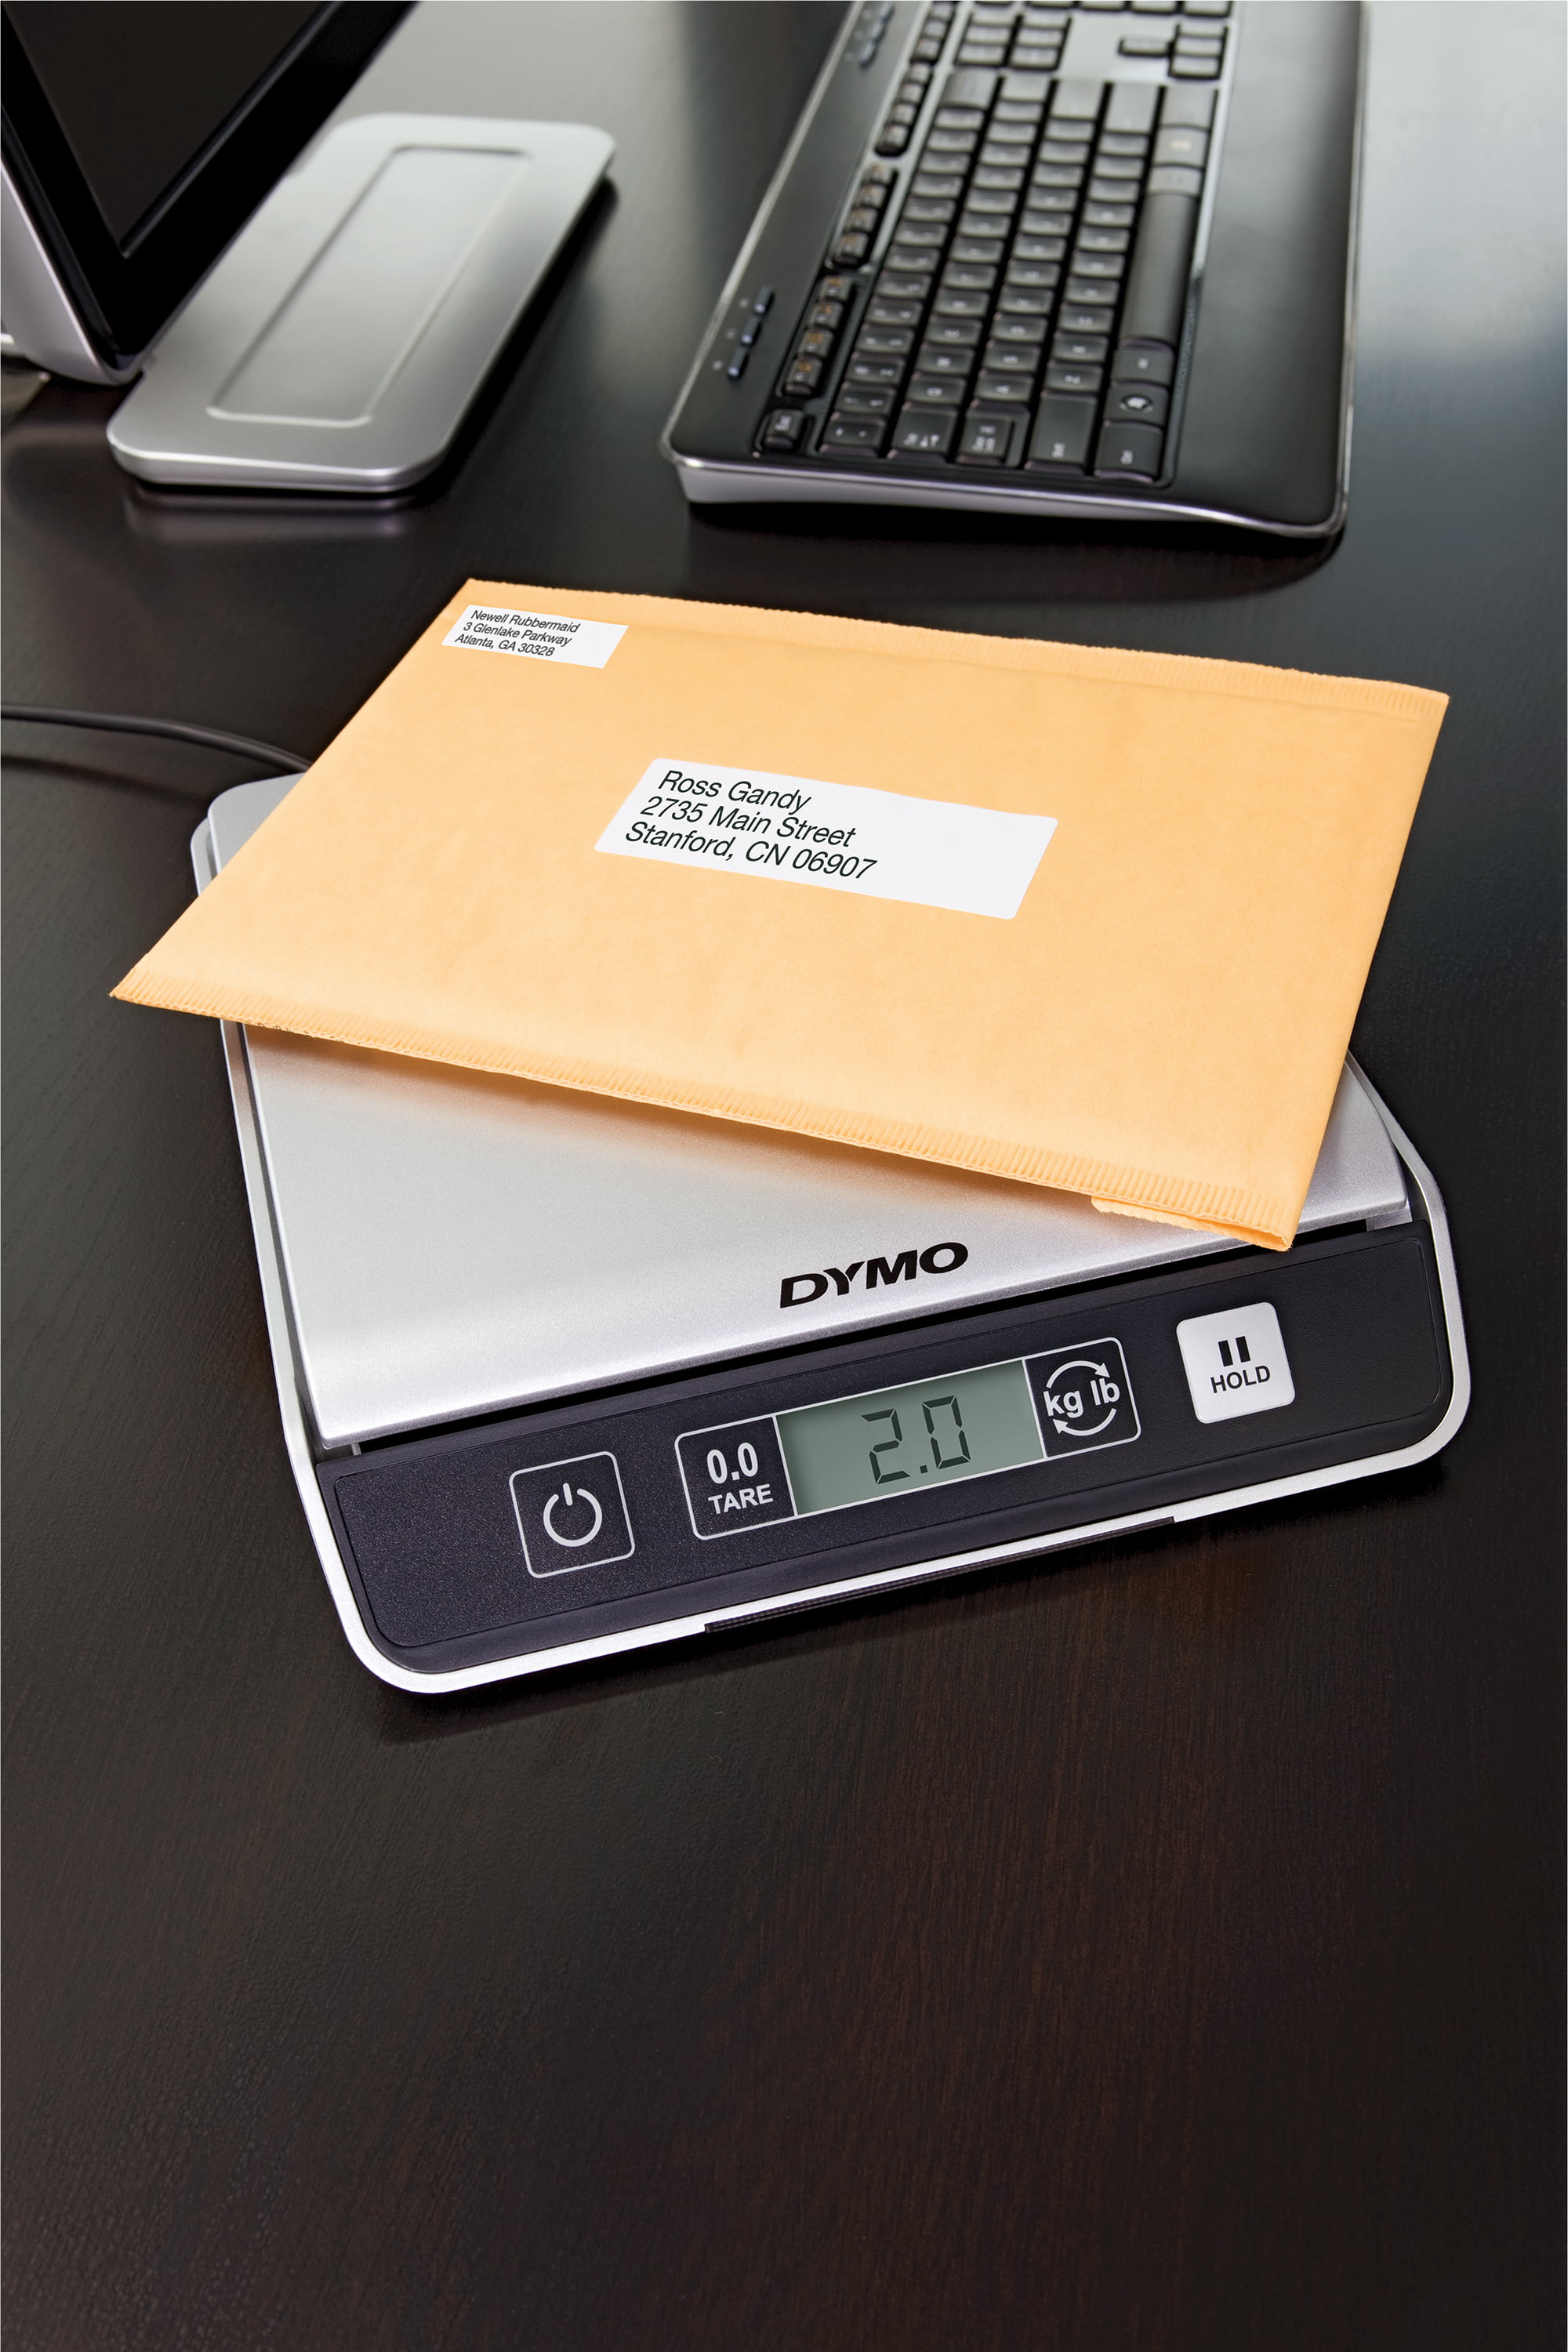 1772059 25-pound DYMO Digital Postal Scale / Shipping Scale New Free Shippi